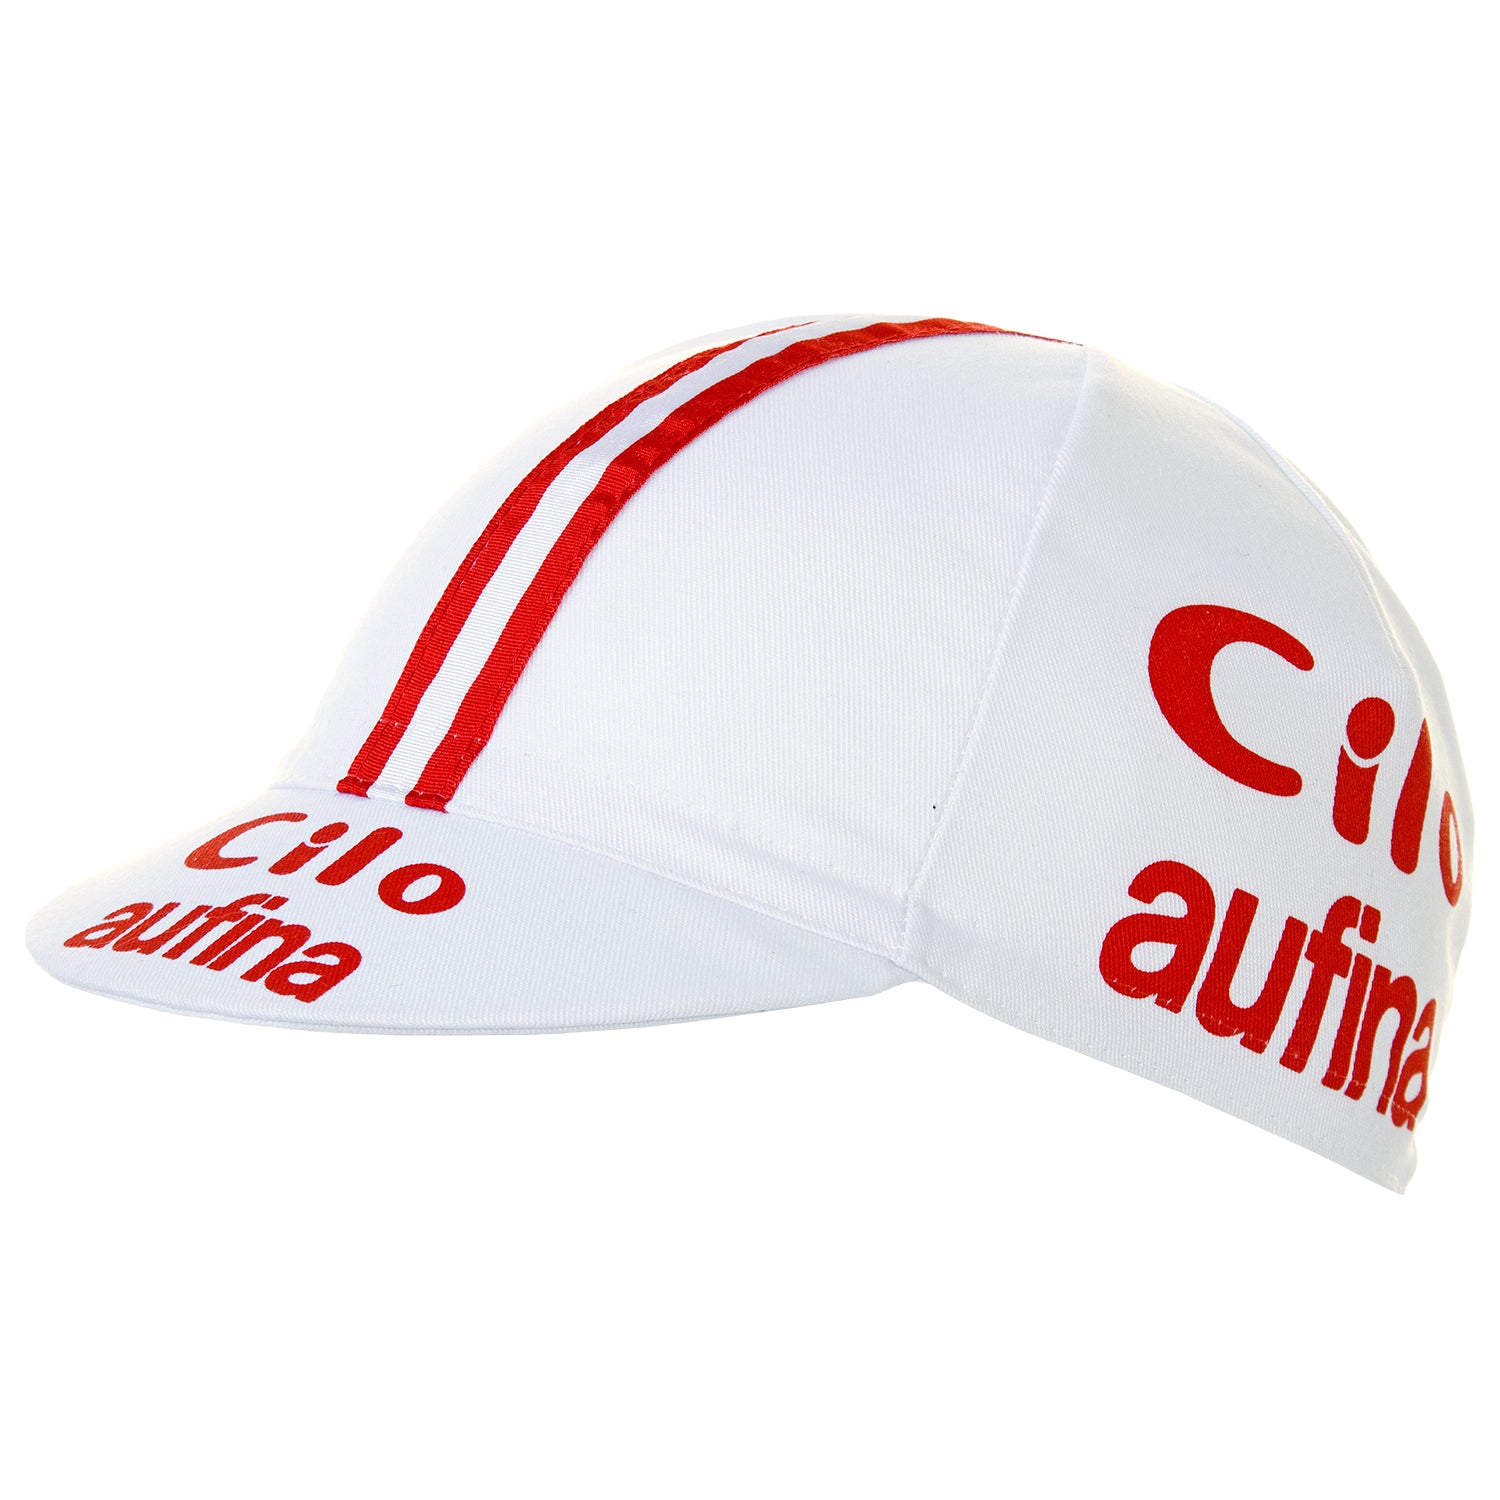 Cycling Caps | Retro & Pro Team | Cycling Hats | Prendas Ciclismo ...